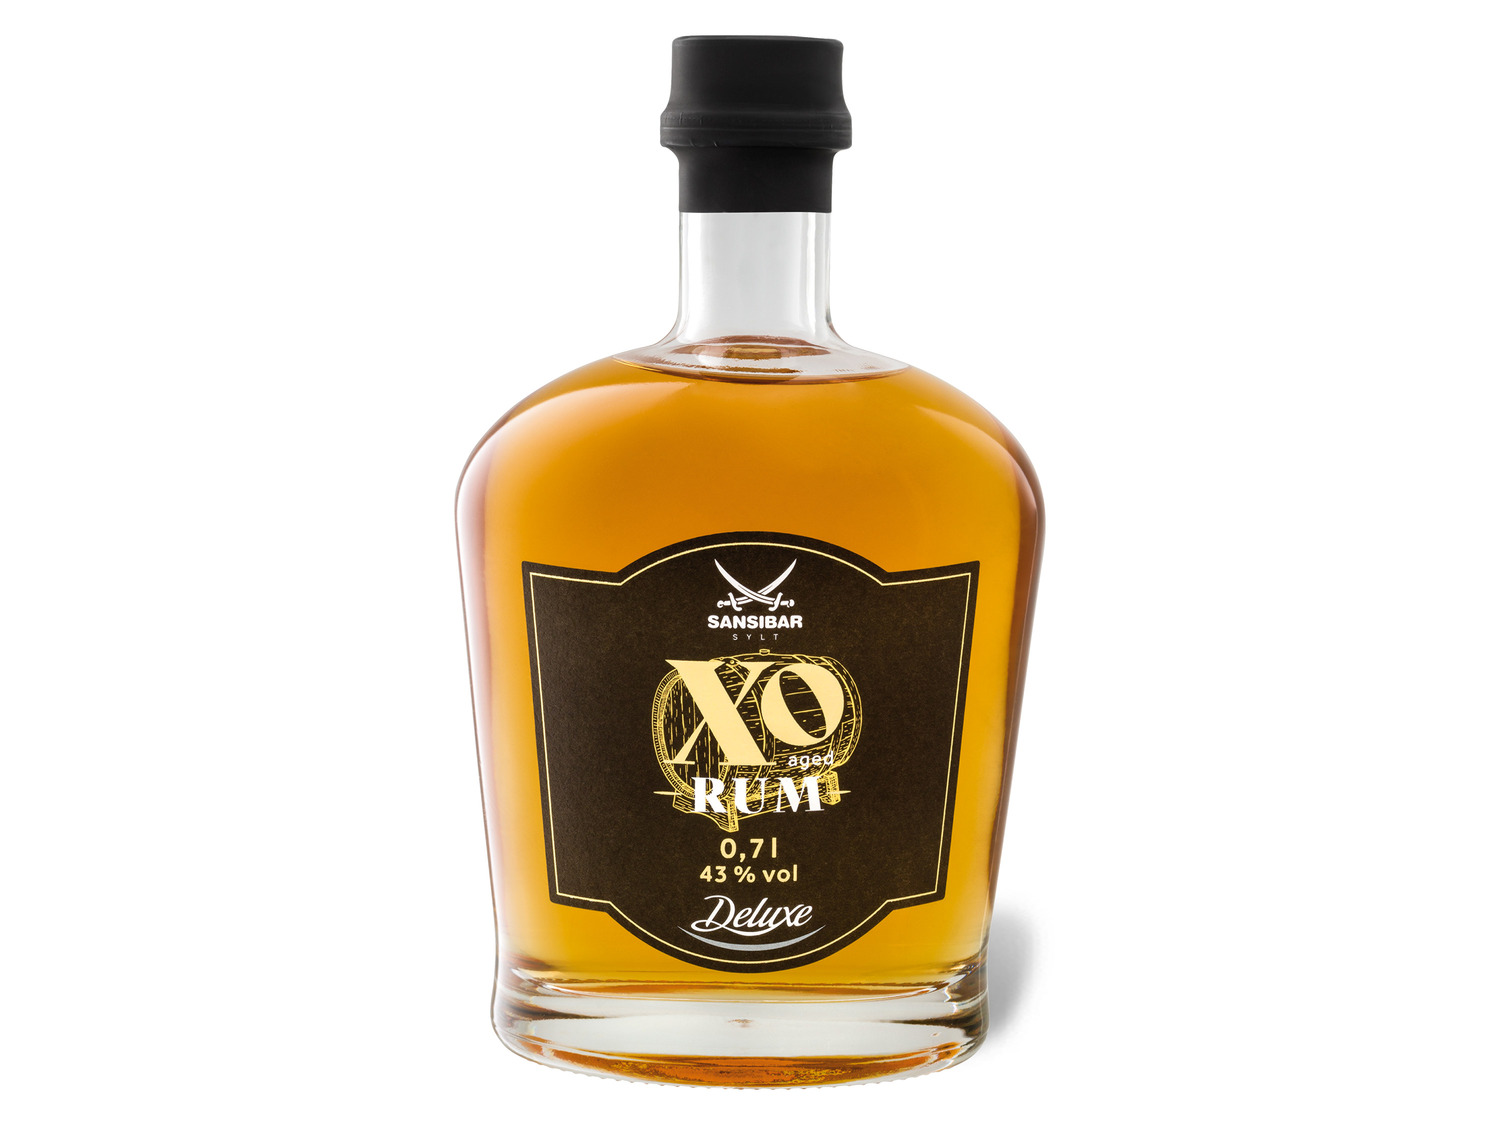 Sansibar Deluxe XO Aged Rum 43% Vol LIDL 